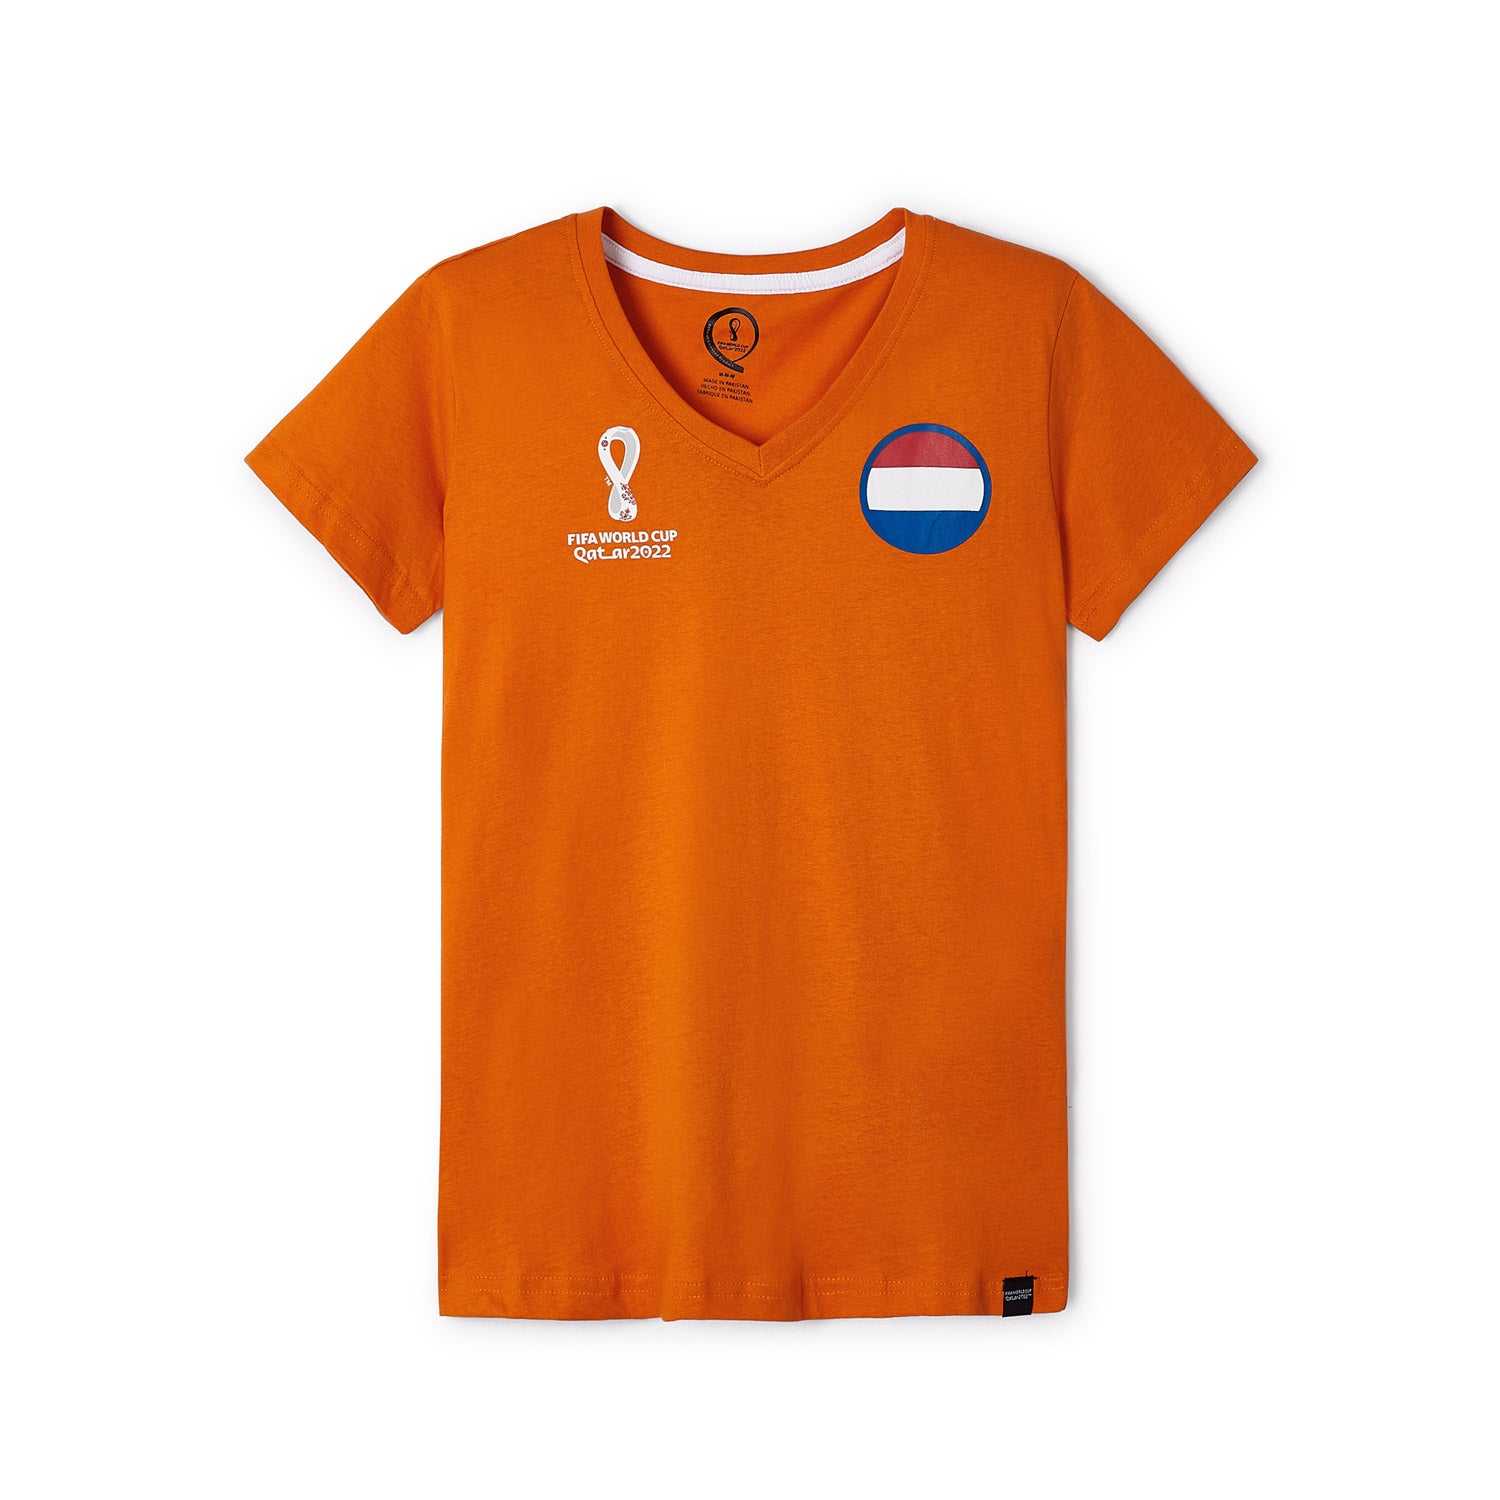 2022 World Cup Netherlands Orange T-Shirt - Women's